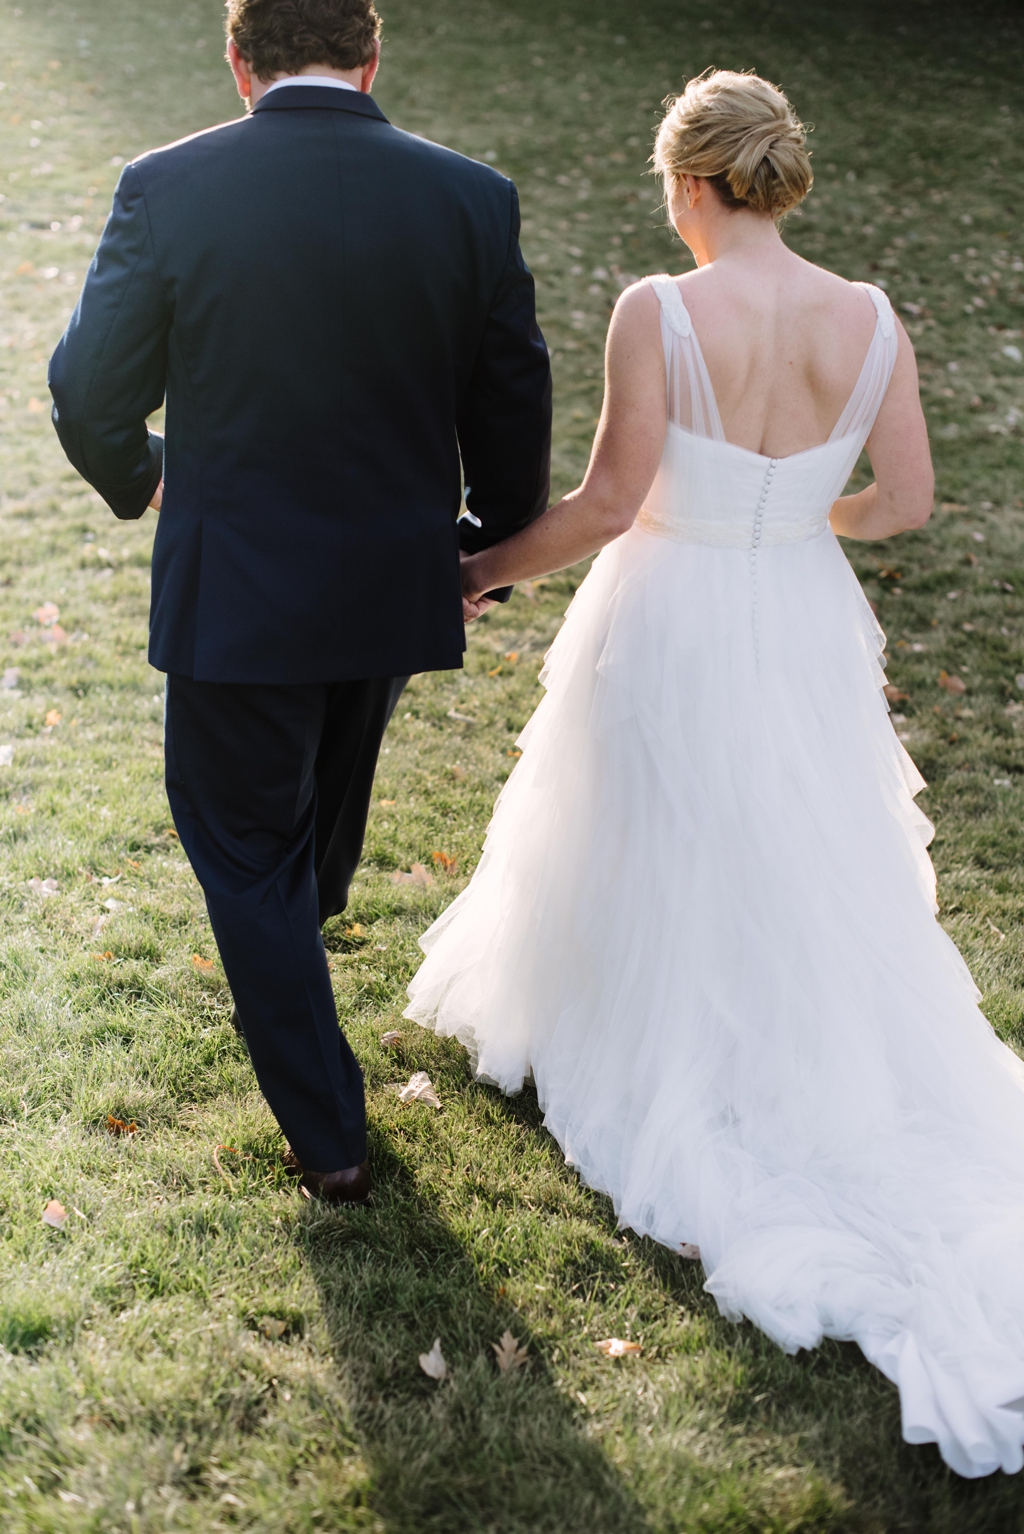 Minnesota Romantic Fall Photos, Couple Walking away holding hands